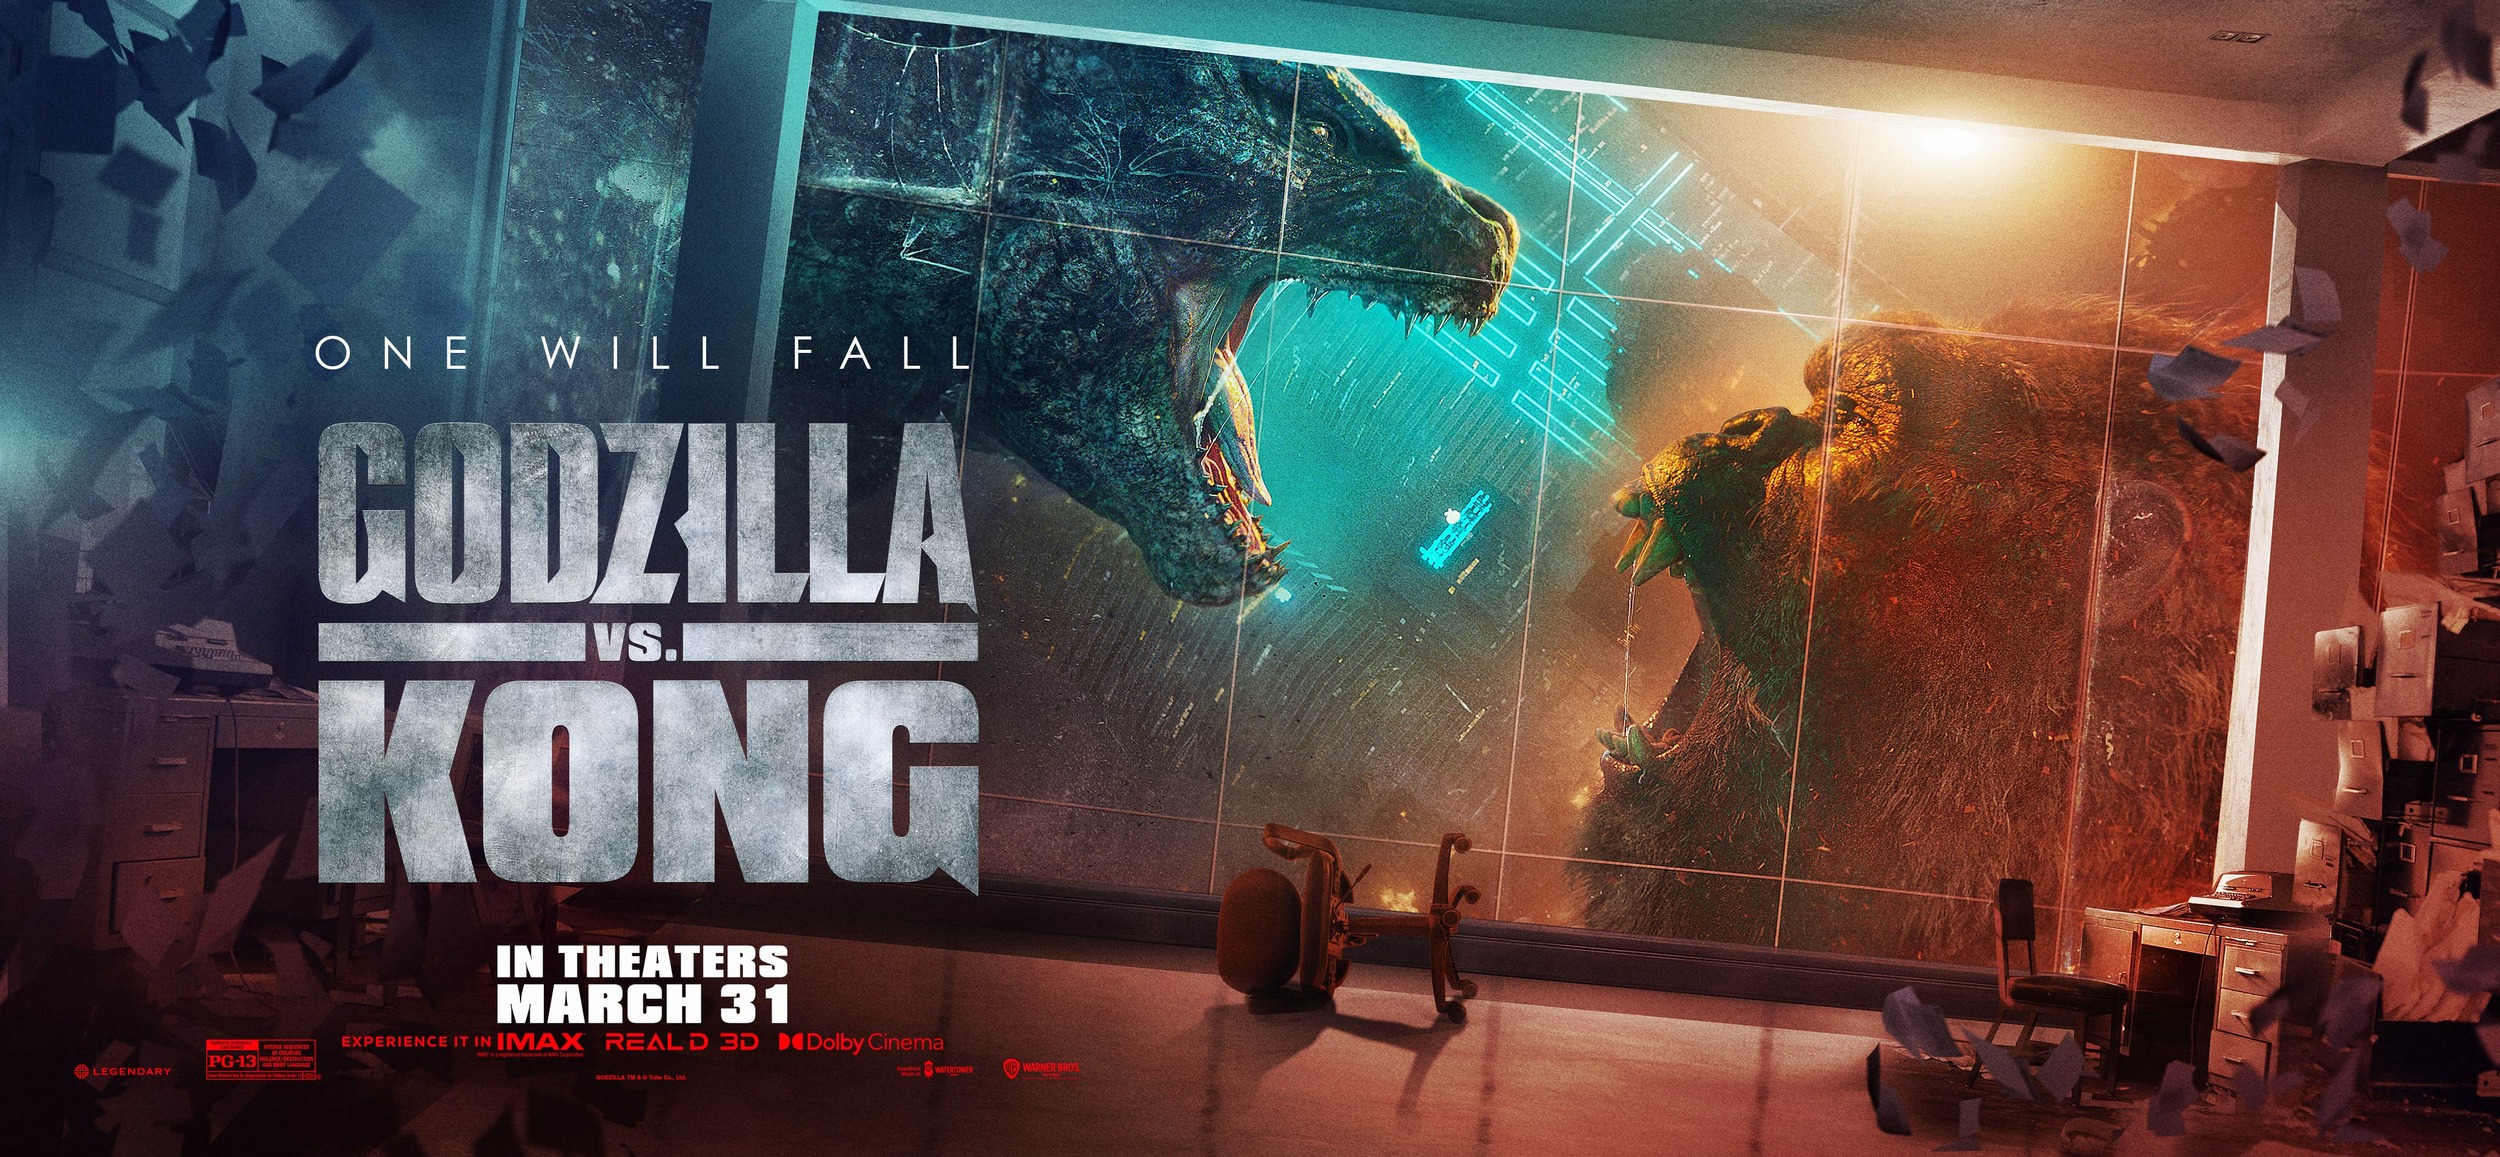 Mega Sized Movie Poster Image for Godzilla vs. Kong (#20 of 20)